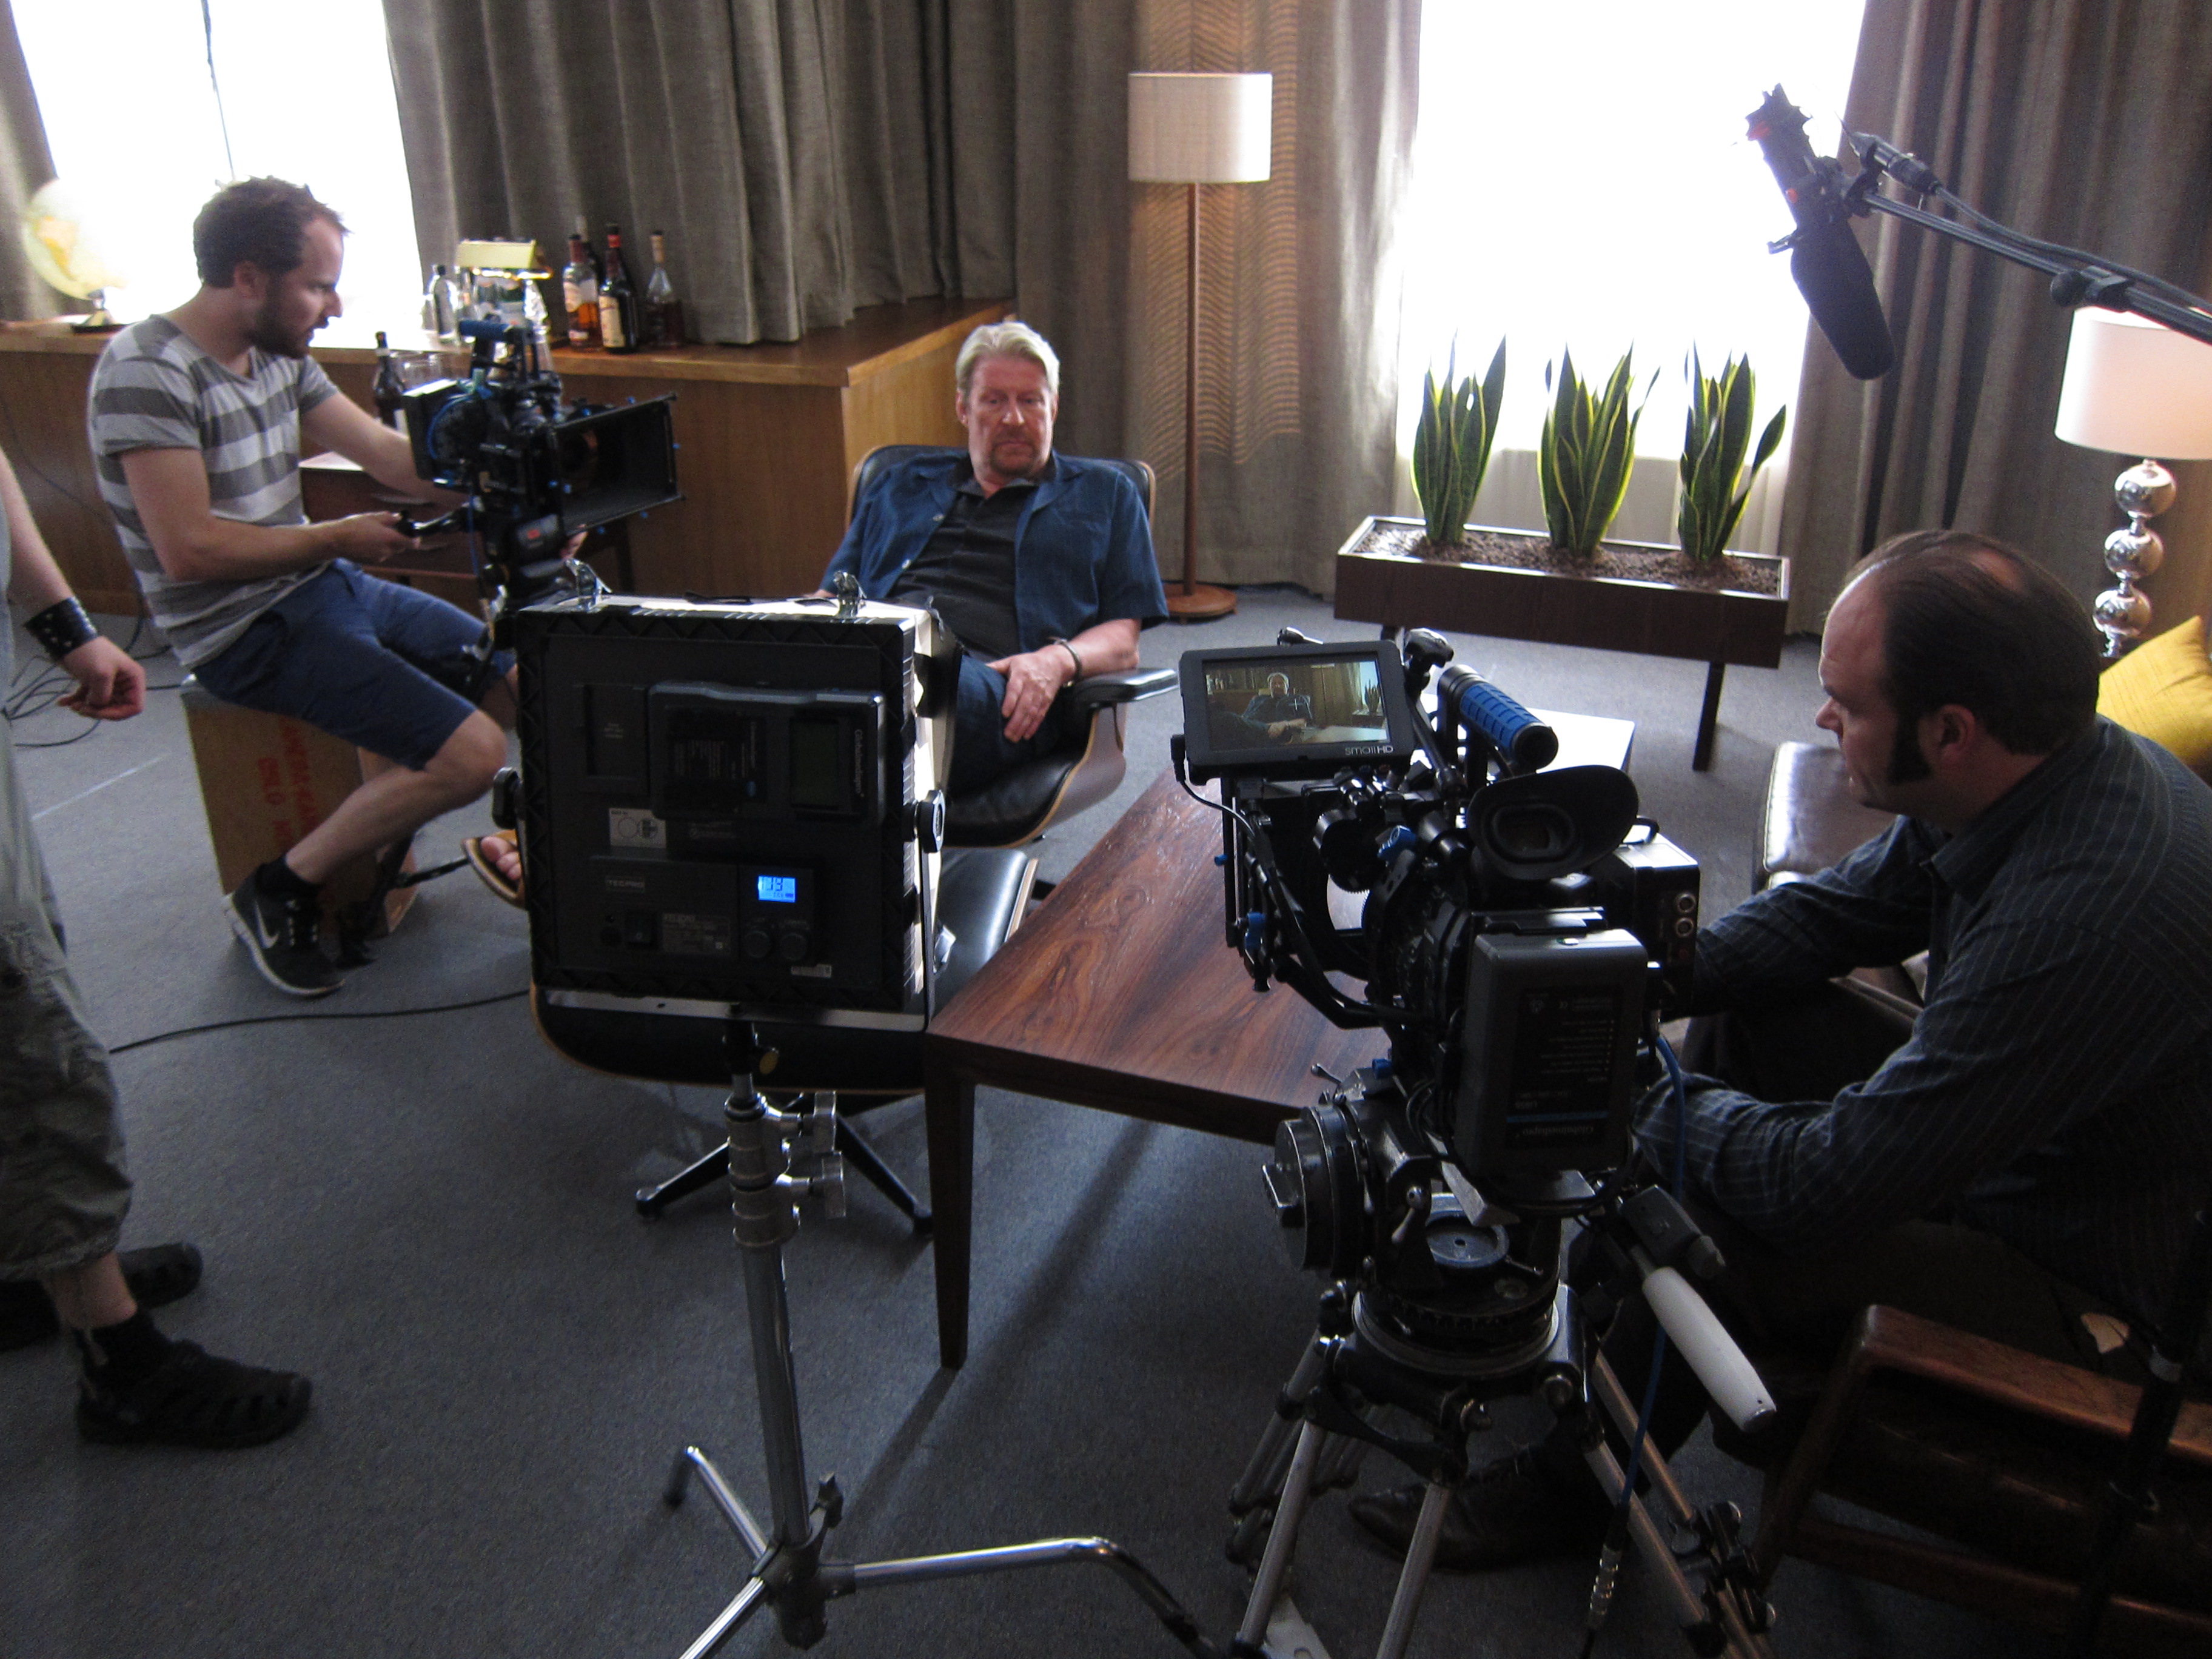 DAG Season 2 with Rolf Lassgård and Atle Antonsen in Ernst office.